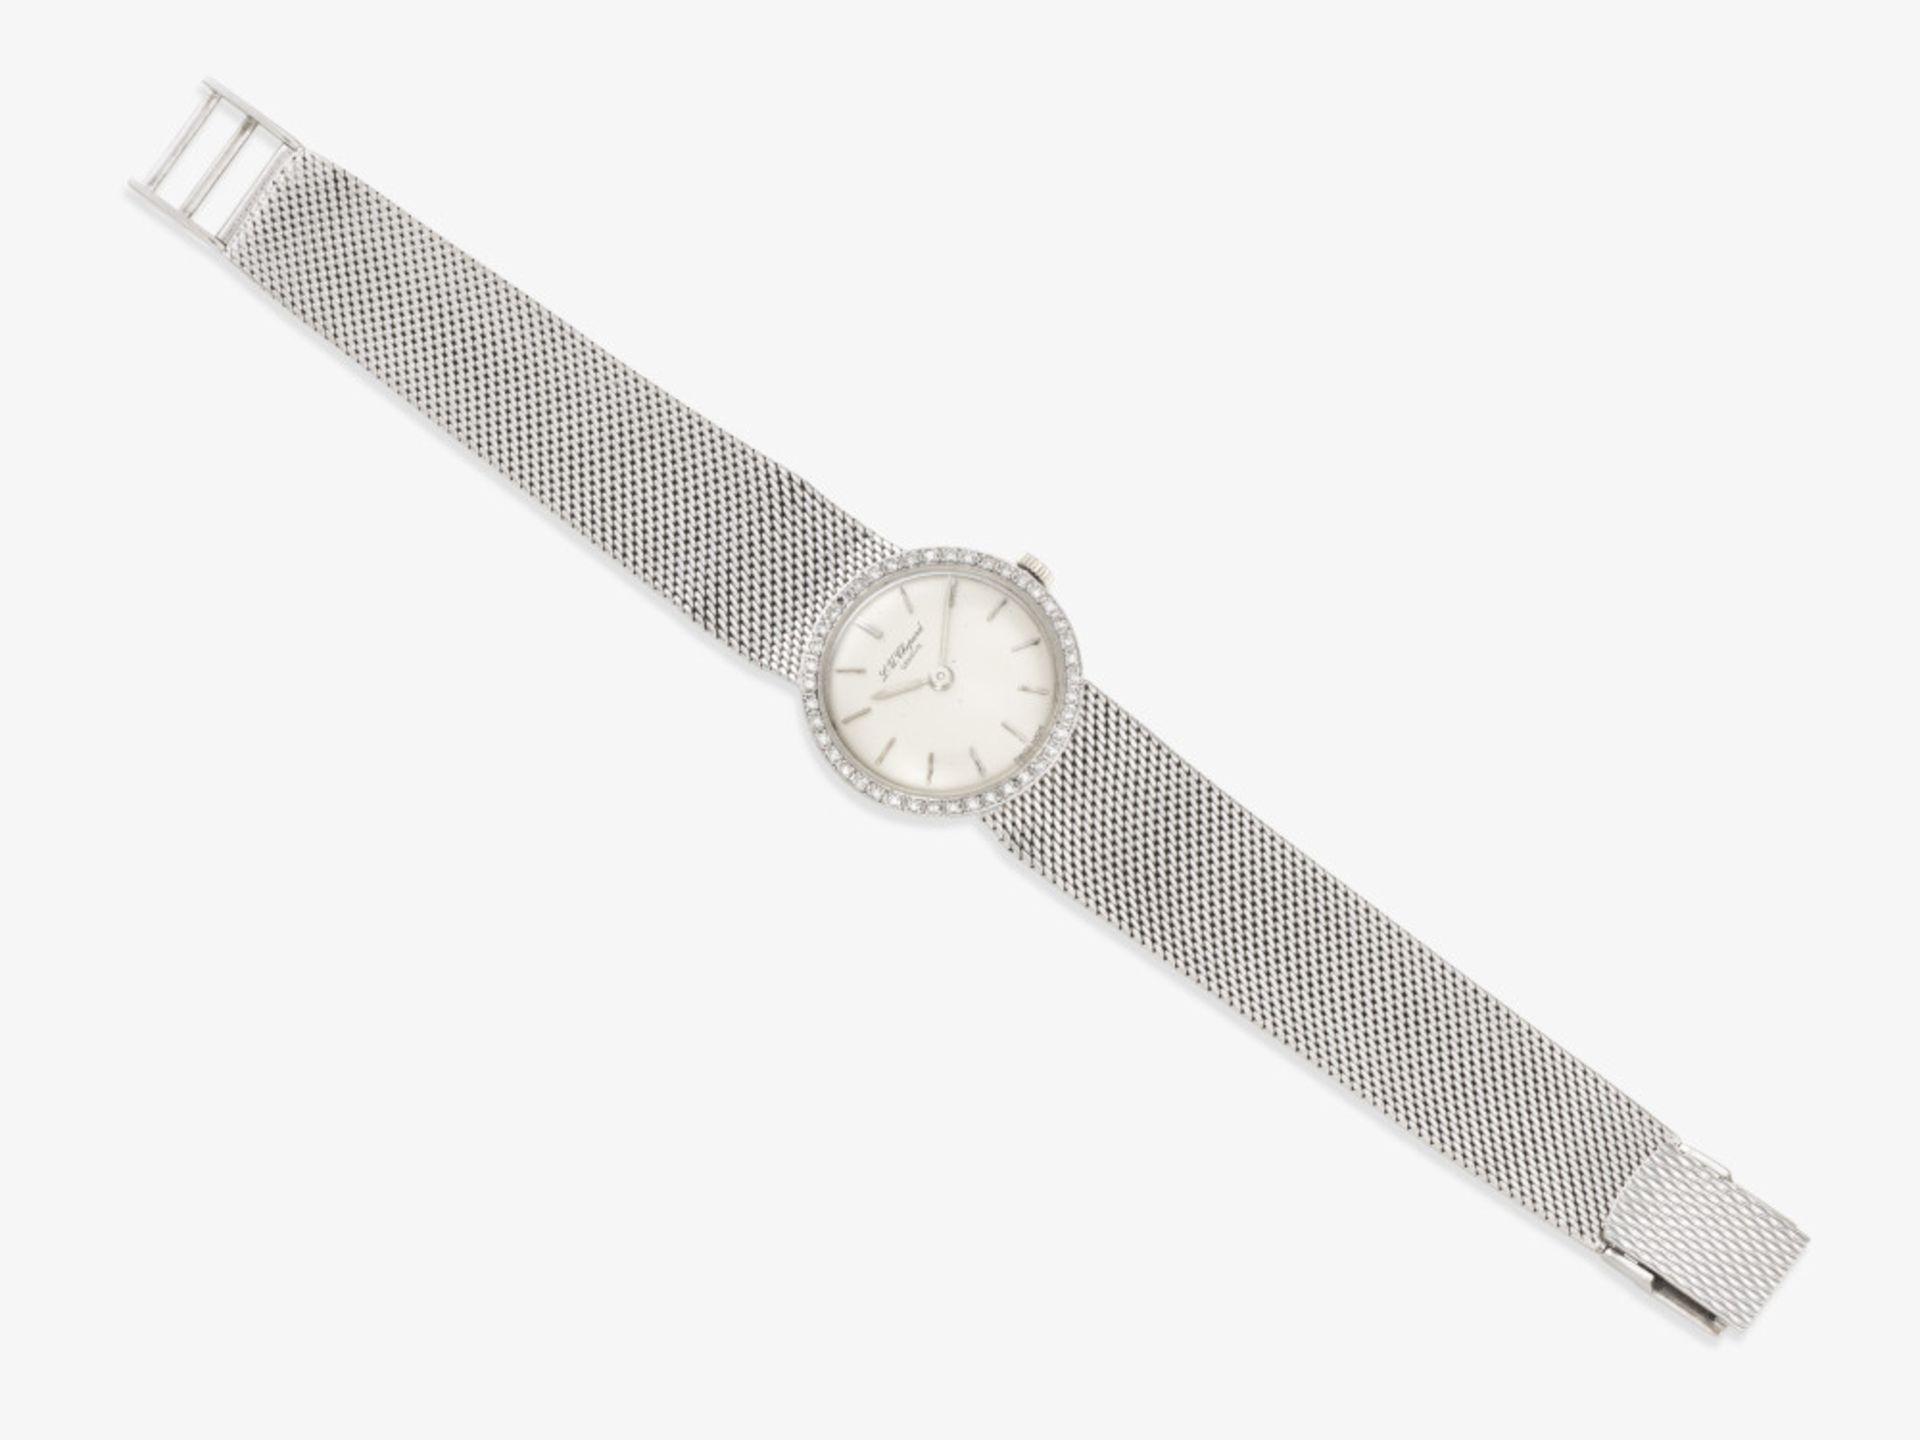 A ladies wristwatch - Switzerland, CHOPARD - Image 2 of 2